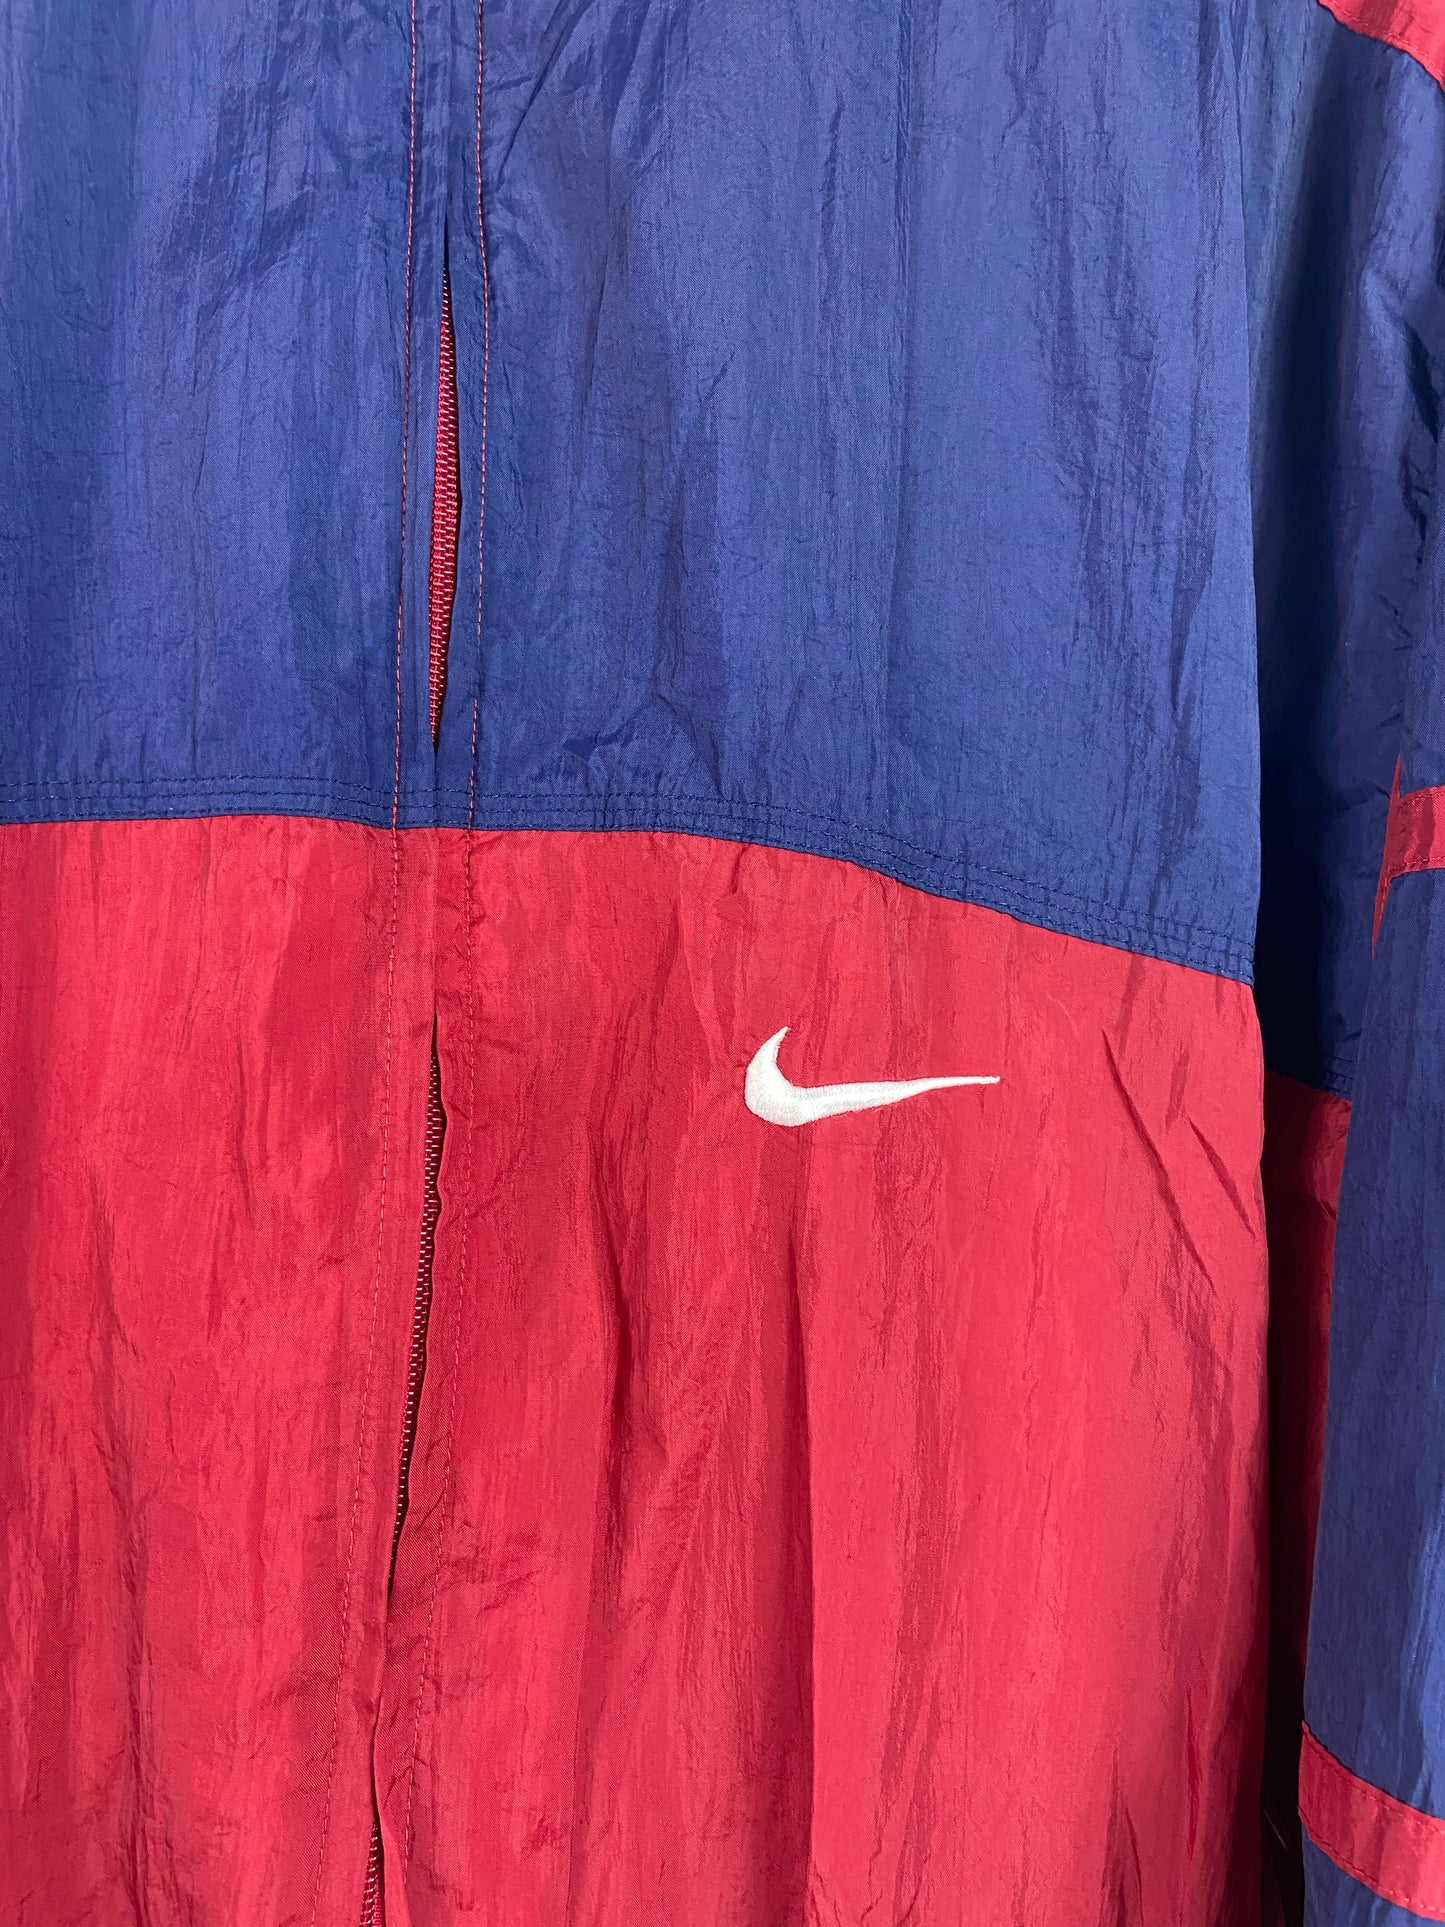 Vgt Nike Dark Red/Blue Track Jacket Sz XL